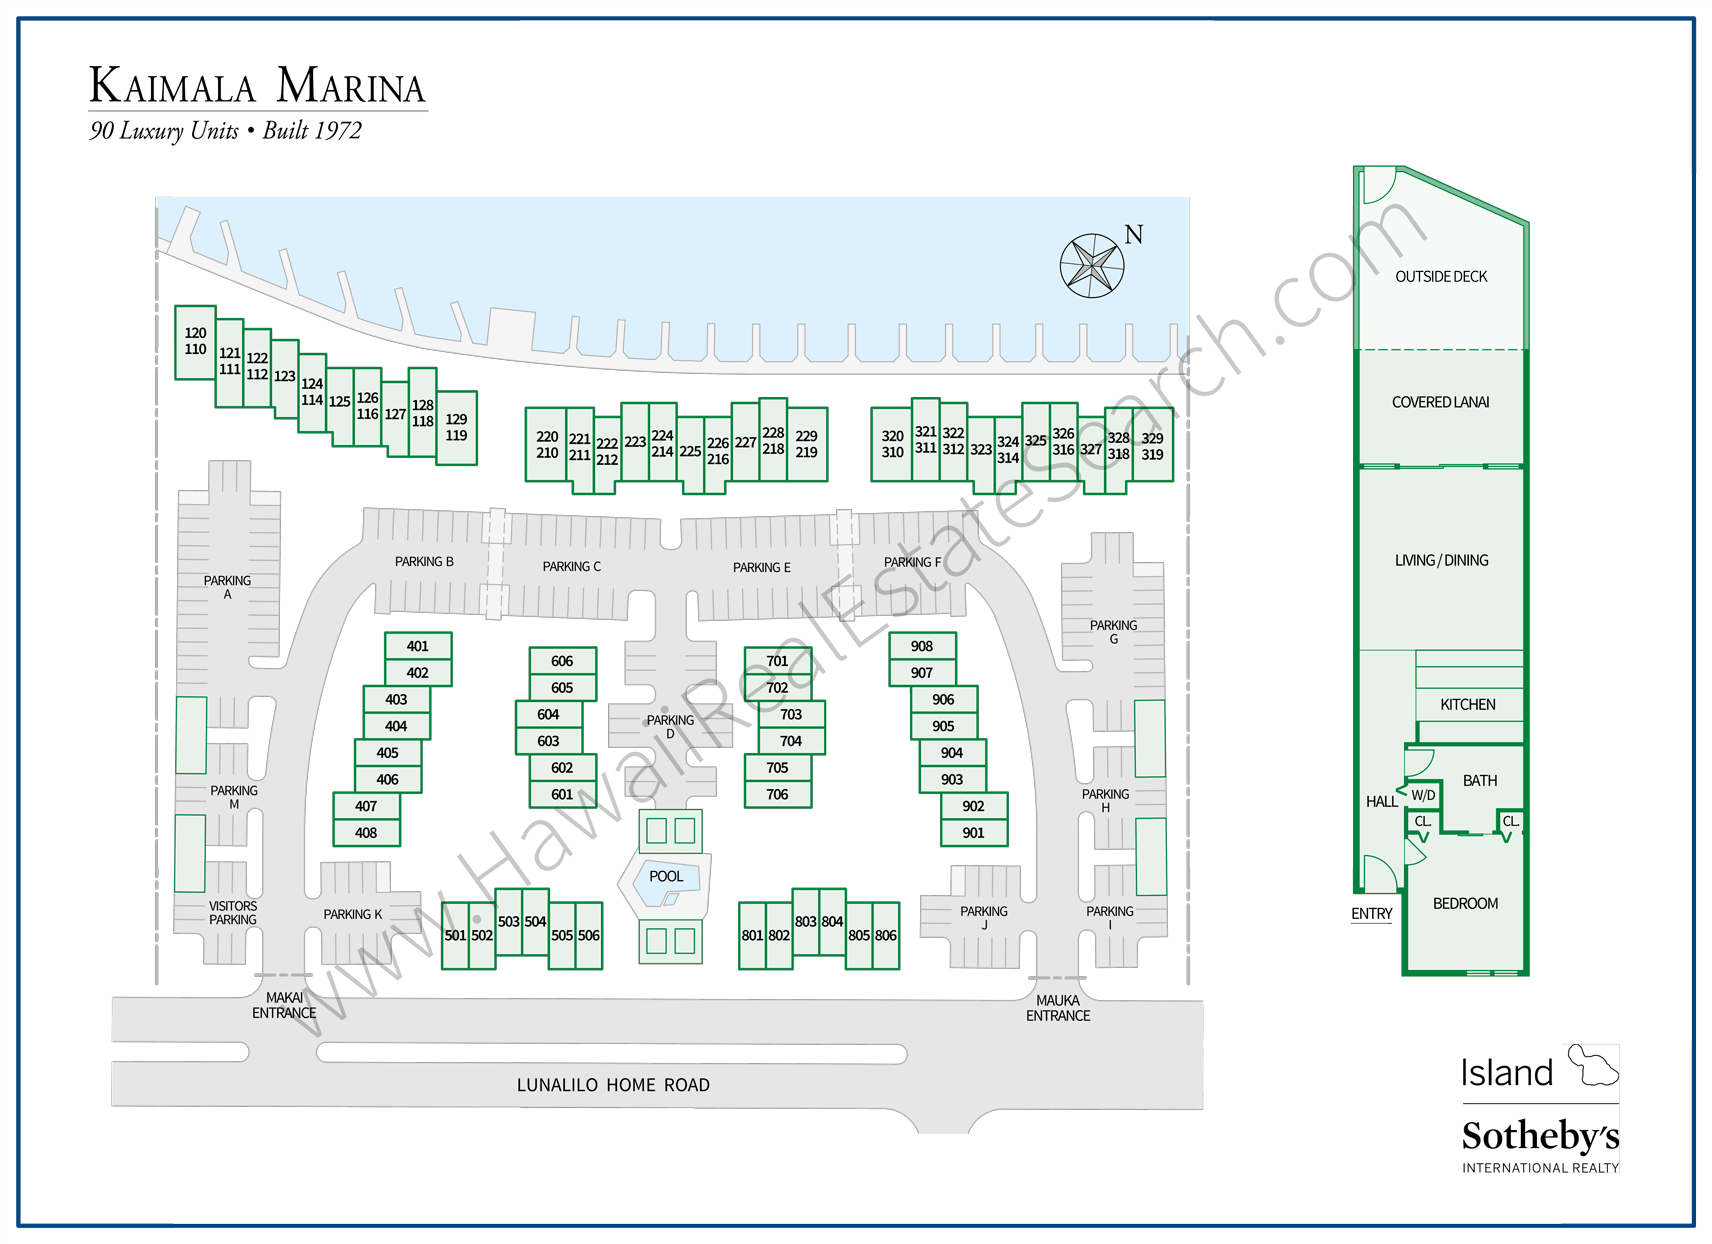 Kaimala Marina Map and Floor Plan